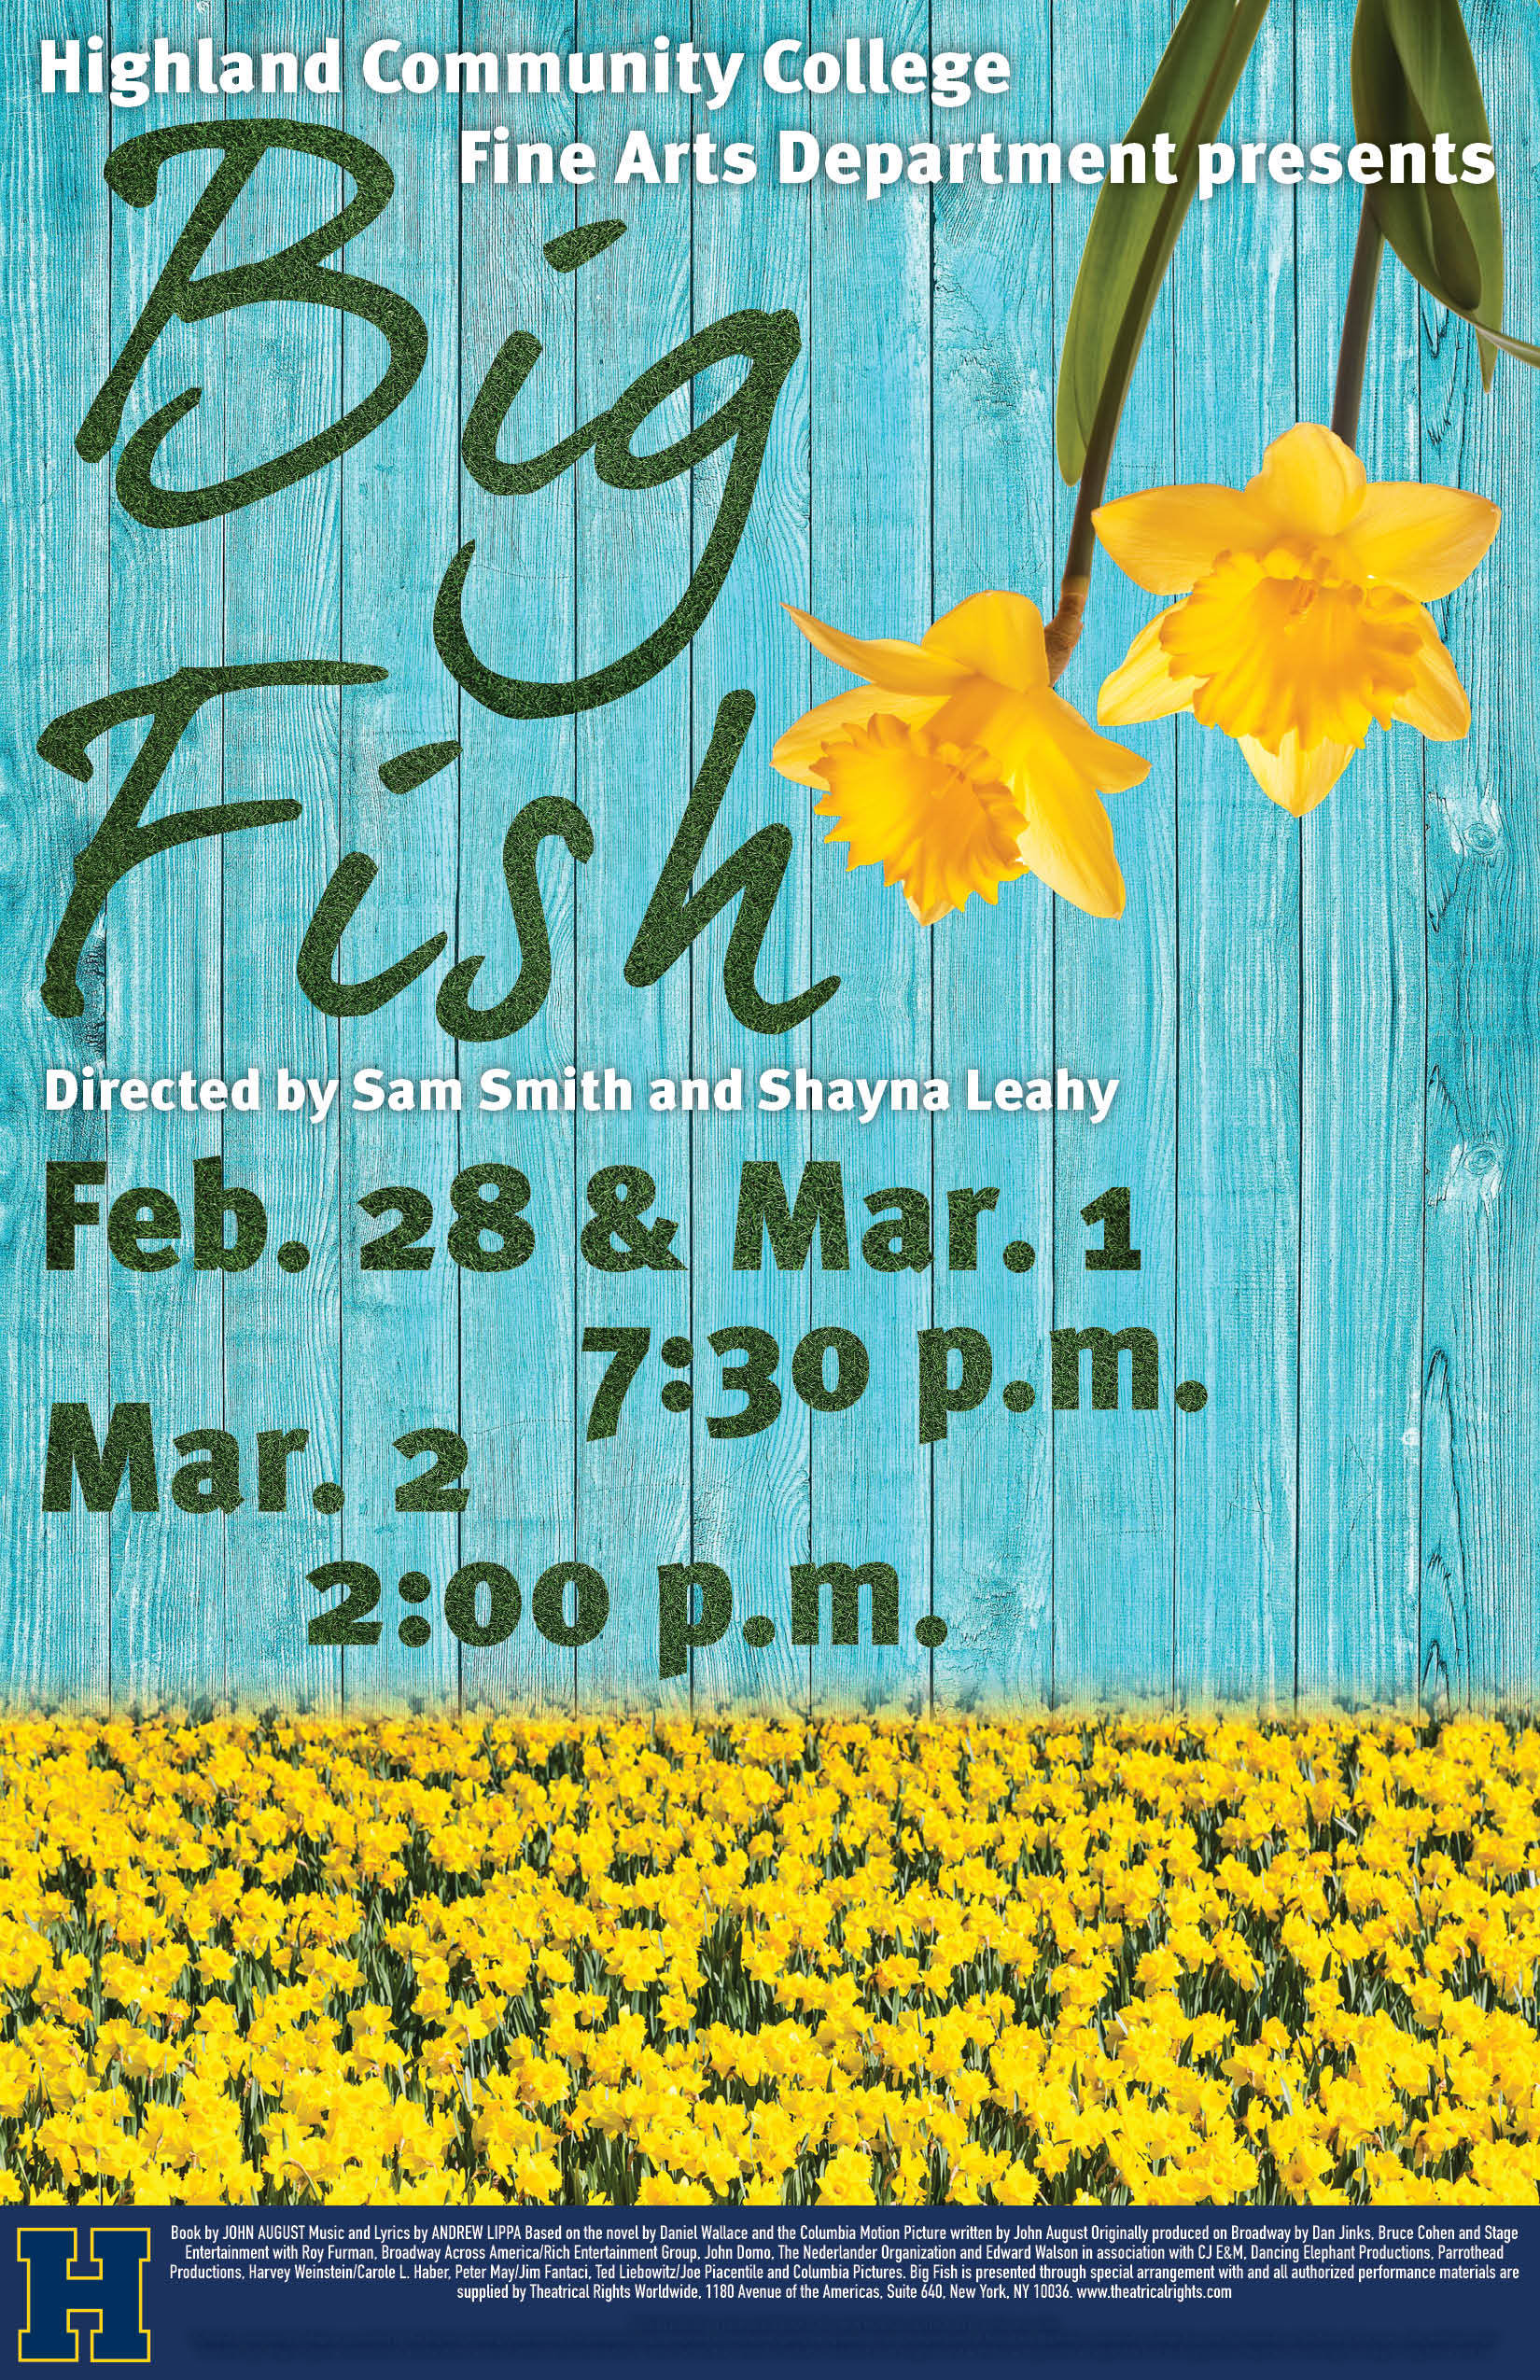 Highland Community College Fine Arts Department Presents Big Fish Opening February 28